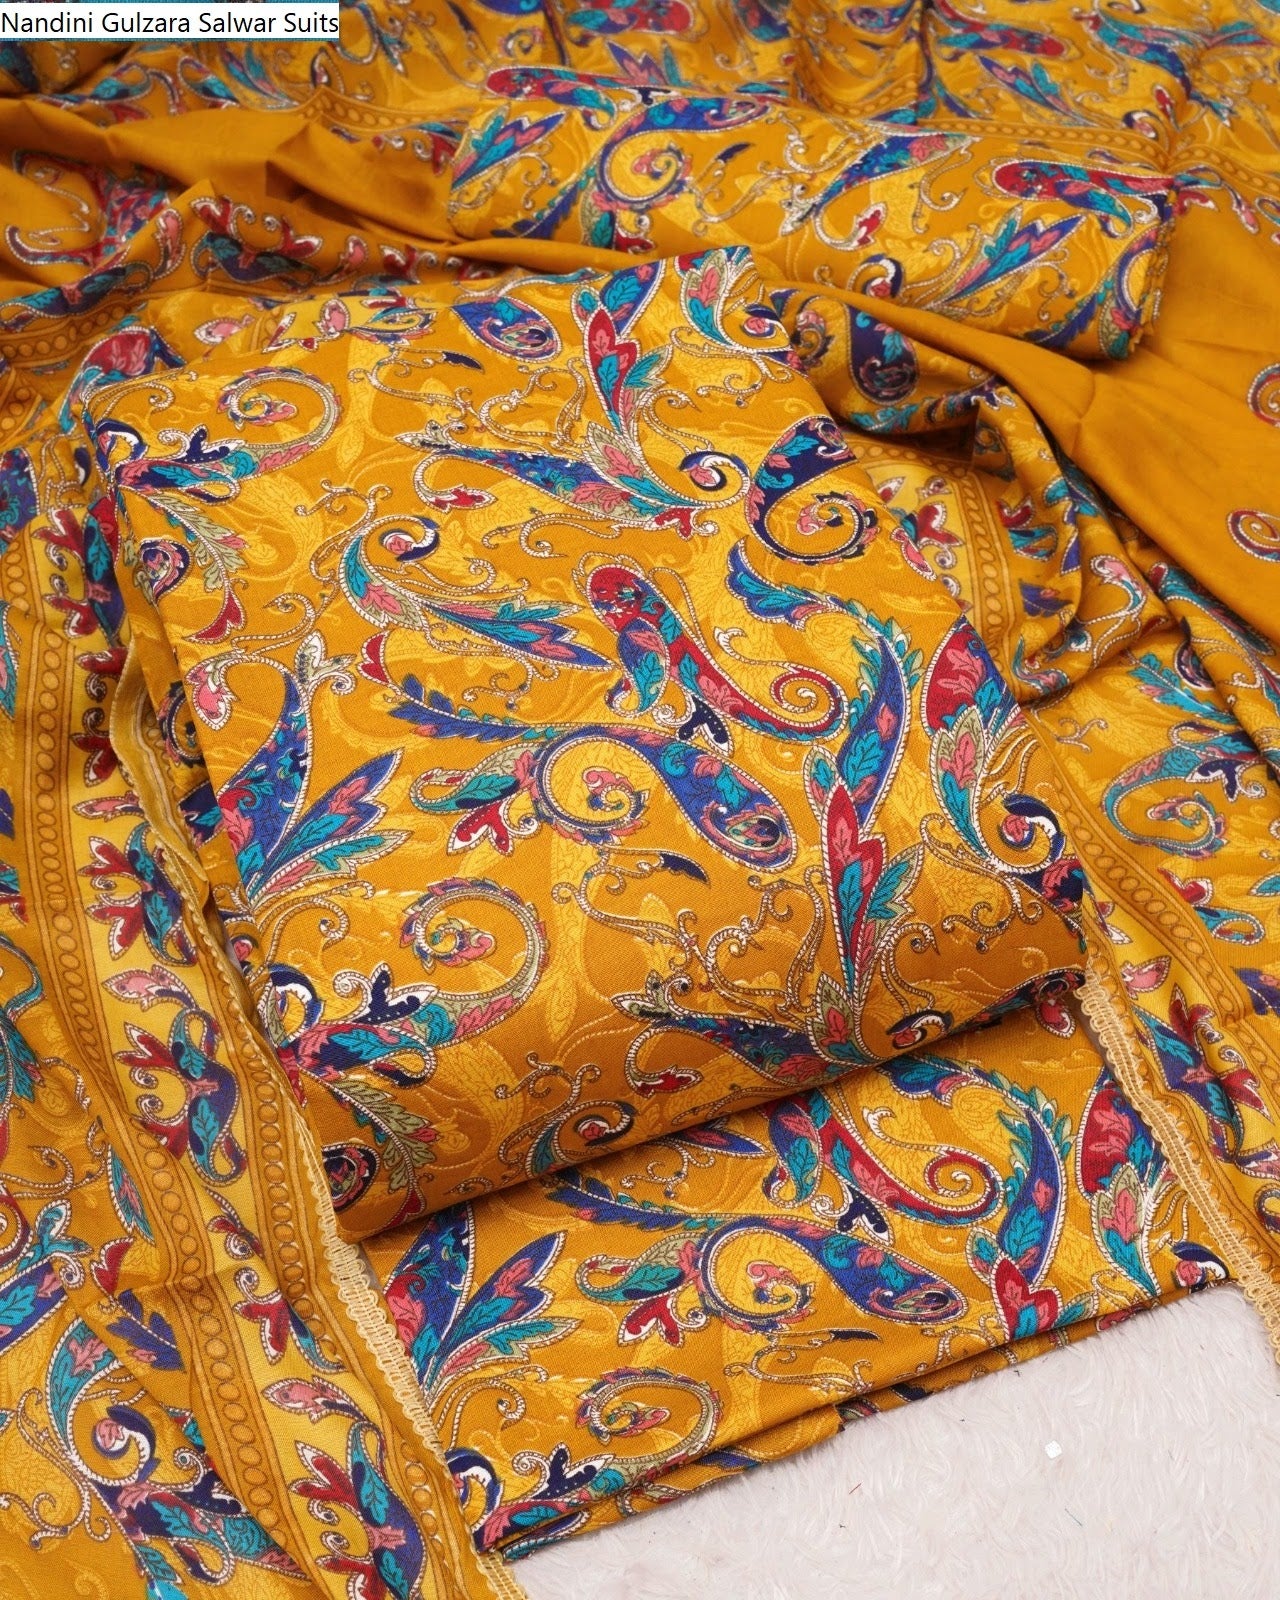 Nandini Gulzara Cotton Salwar Suits